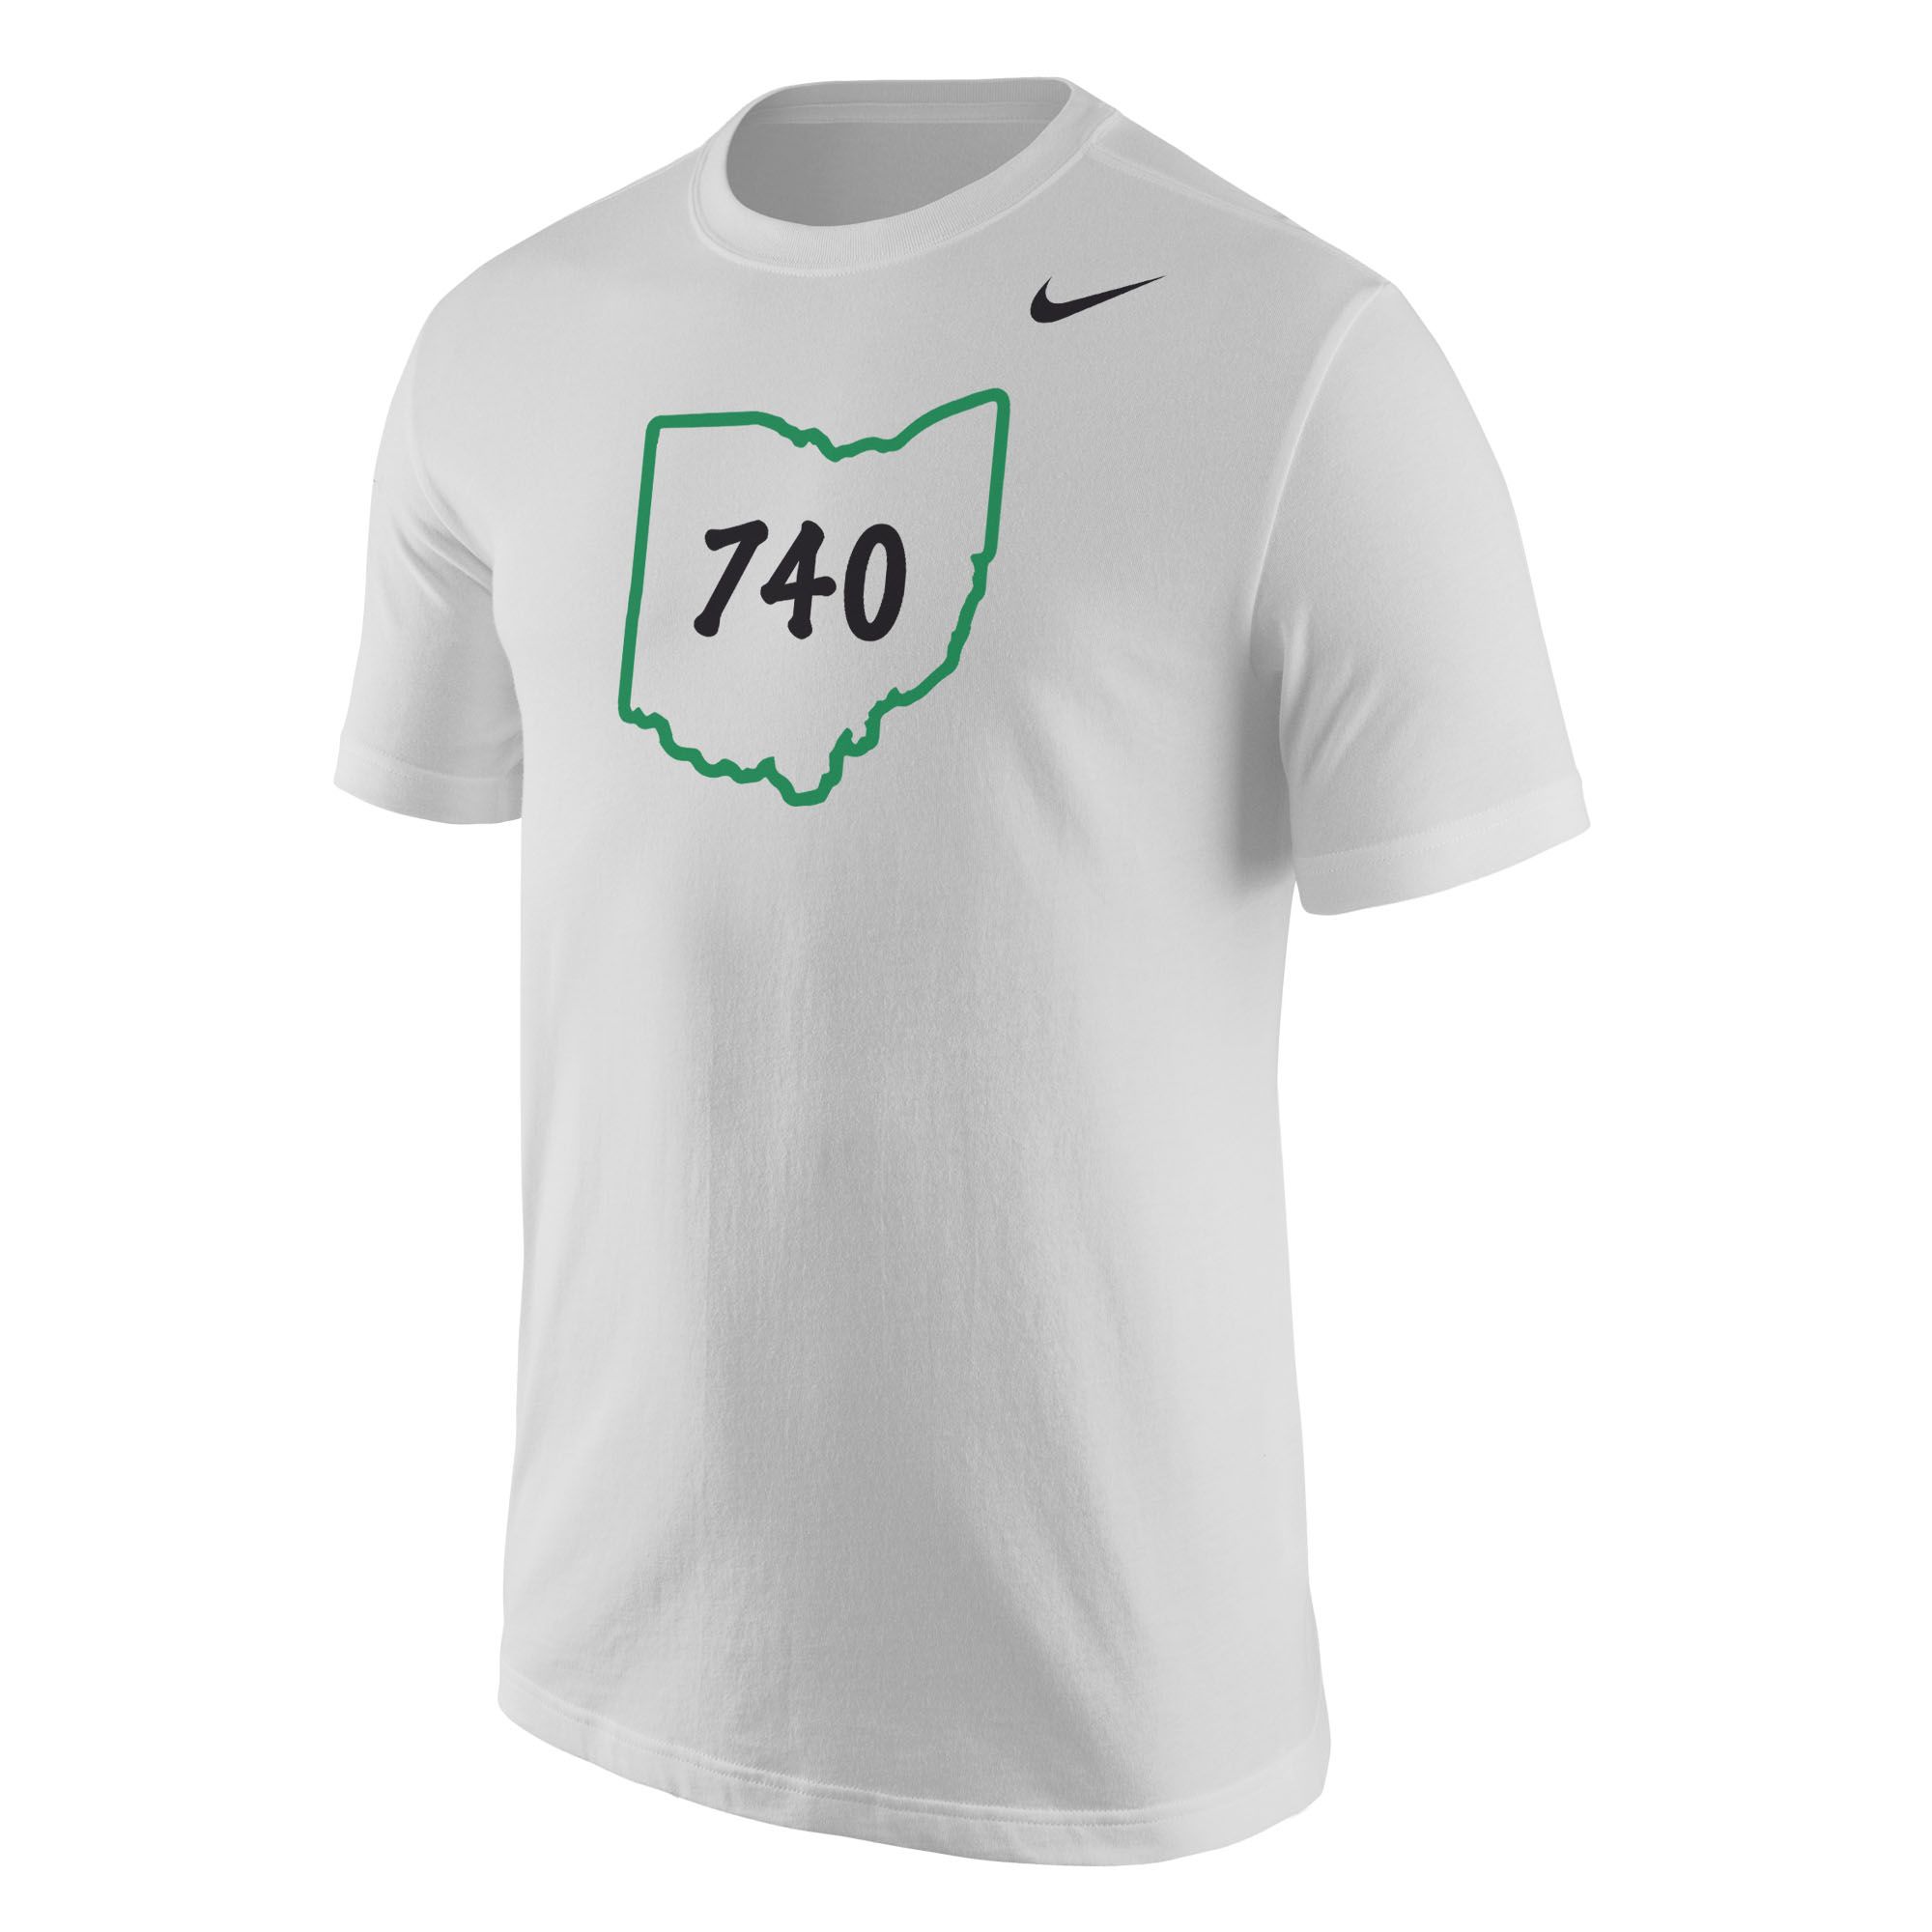 Nike 740 Area Code T-Shirt | DICK'S 